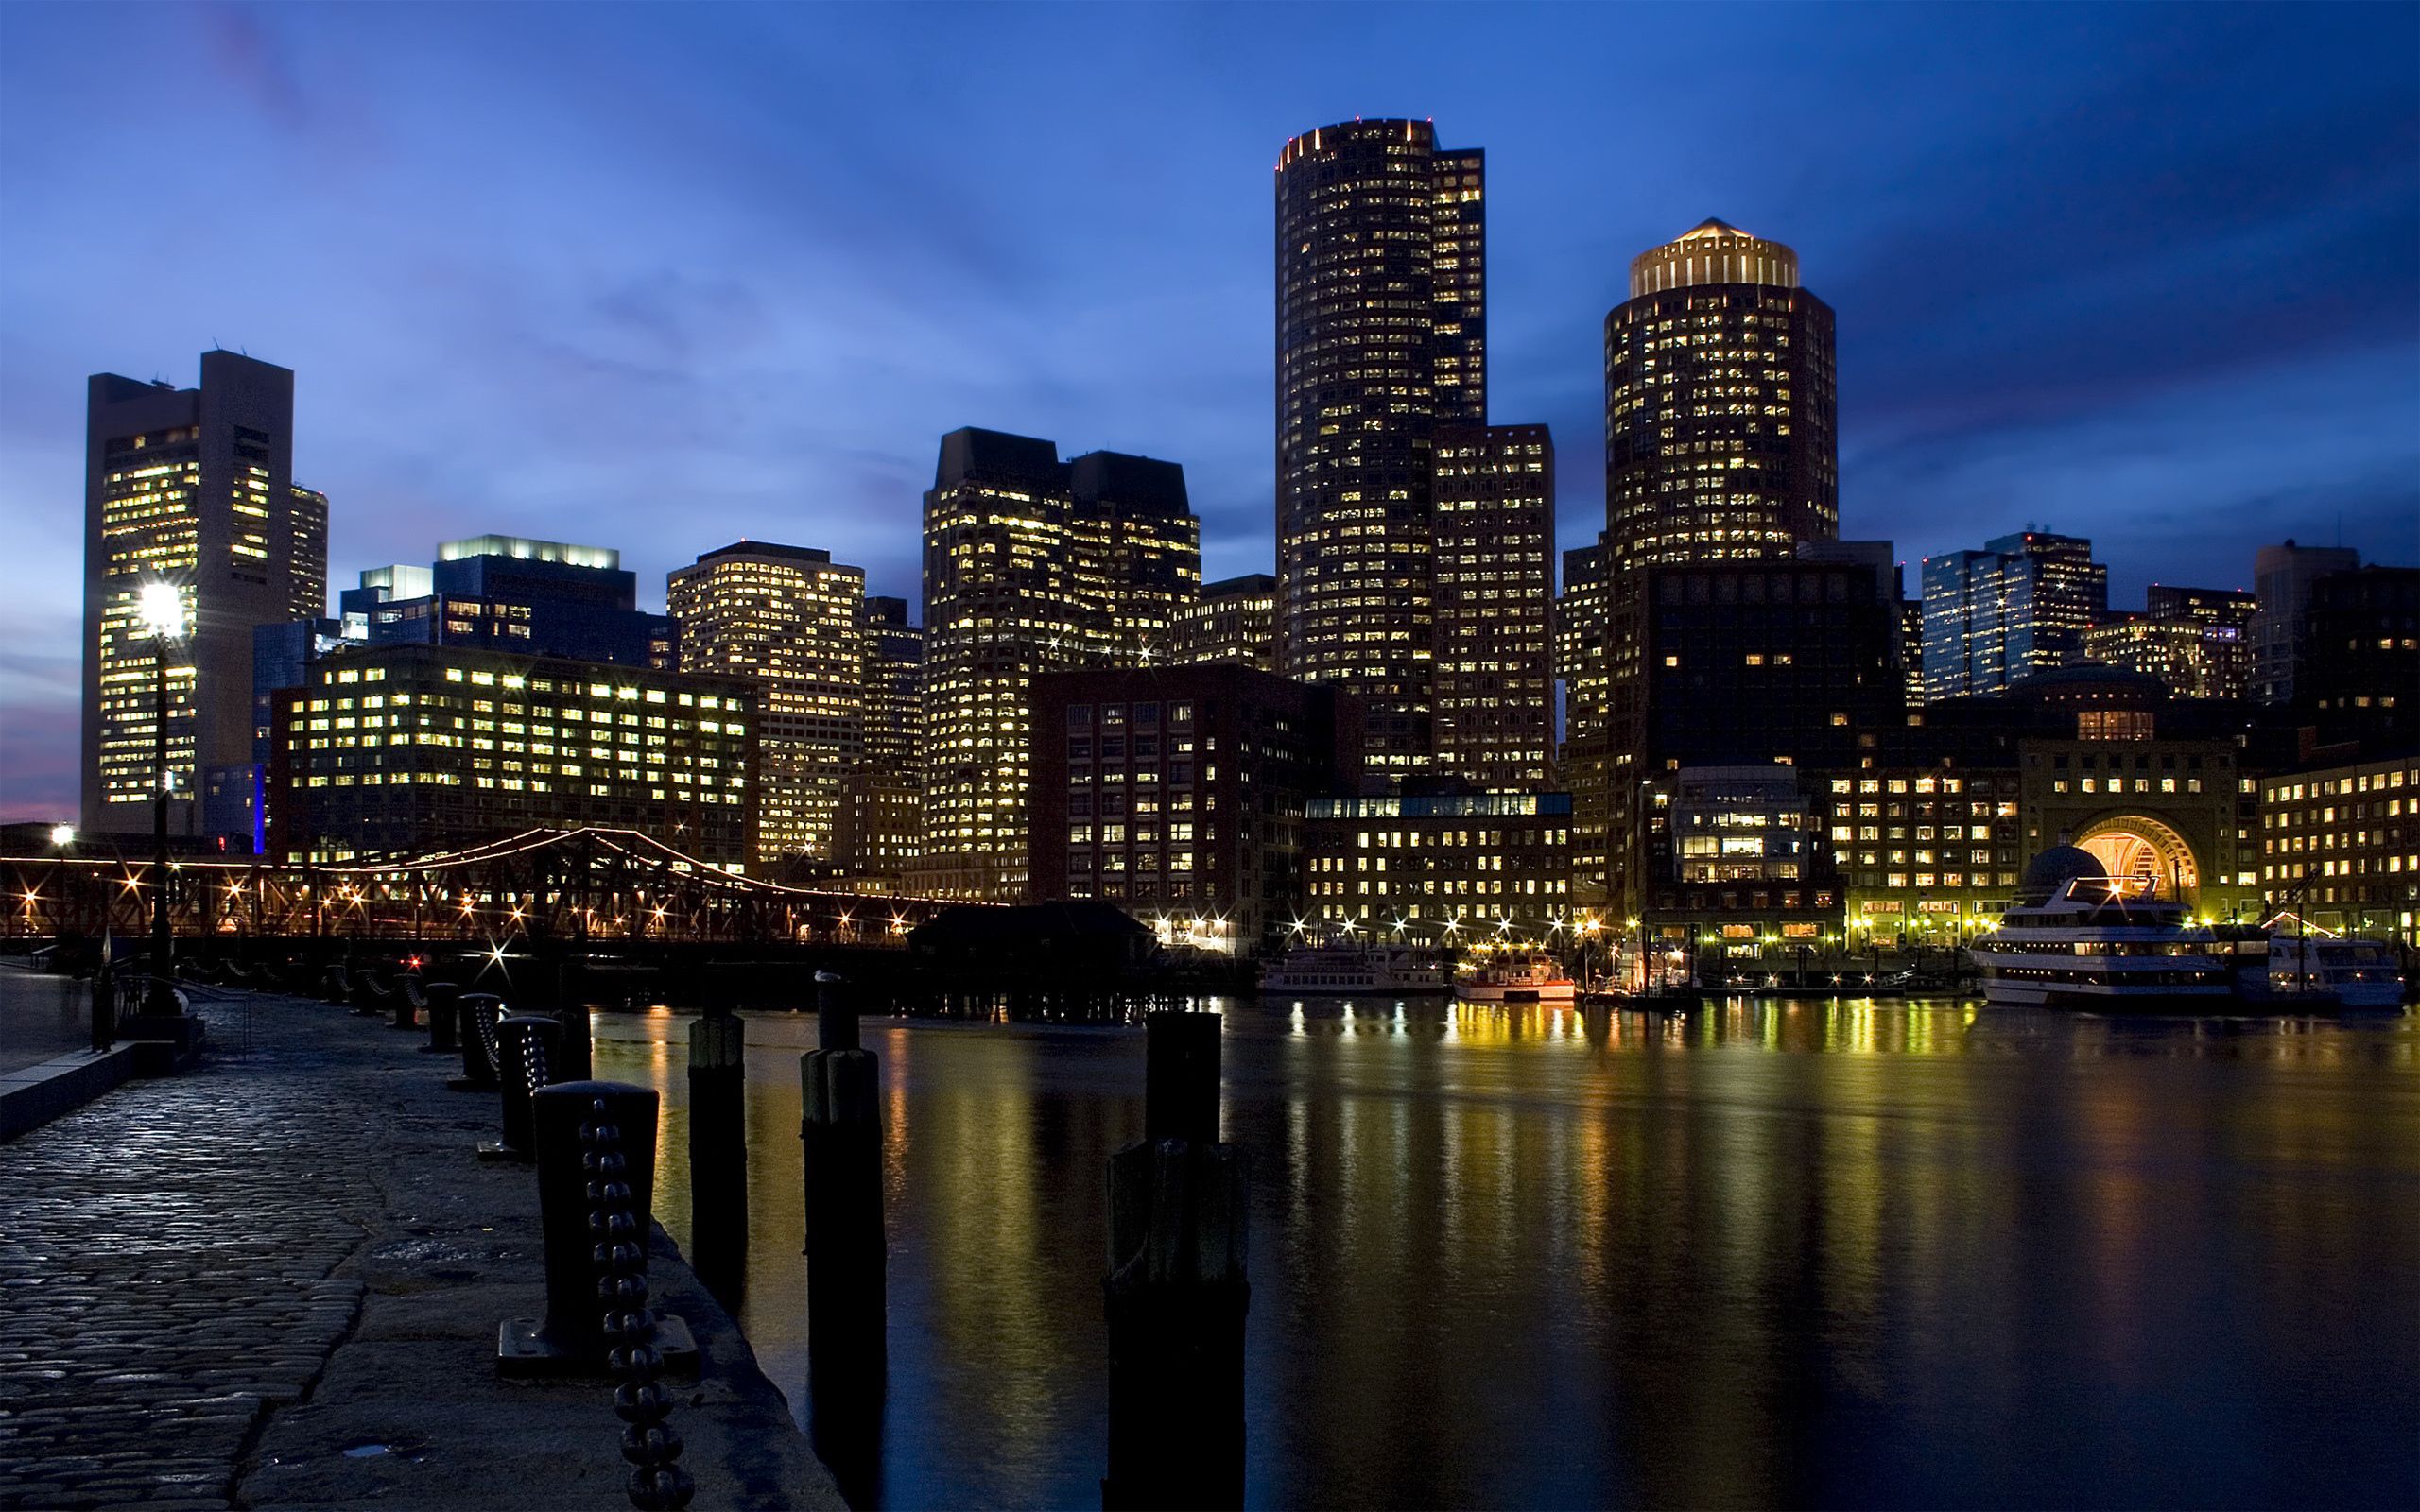 cities, rivers, silence, loneliness, urban landscape, cityscape, coziness, comfort, boston, calmness, tranquillity